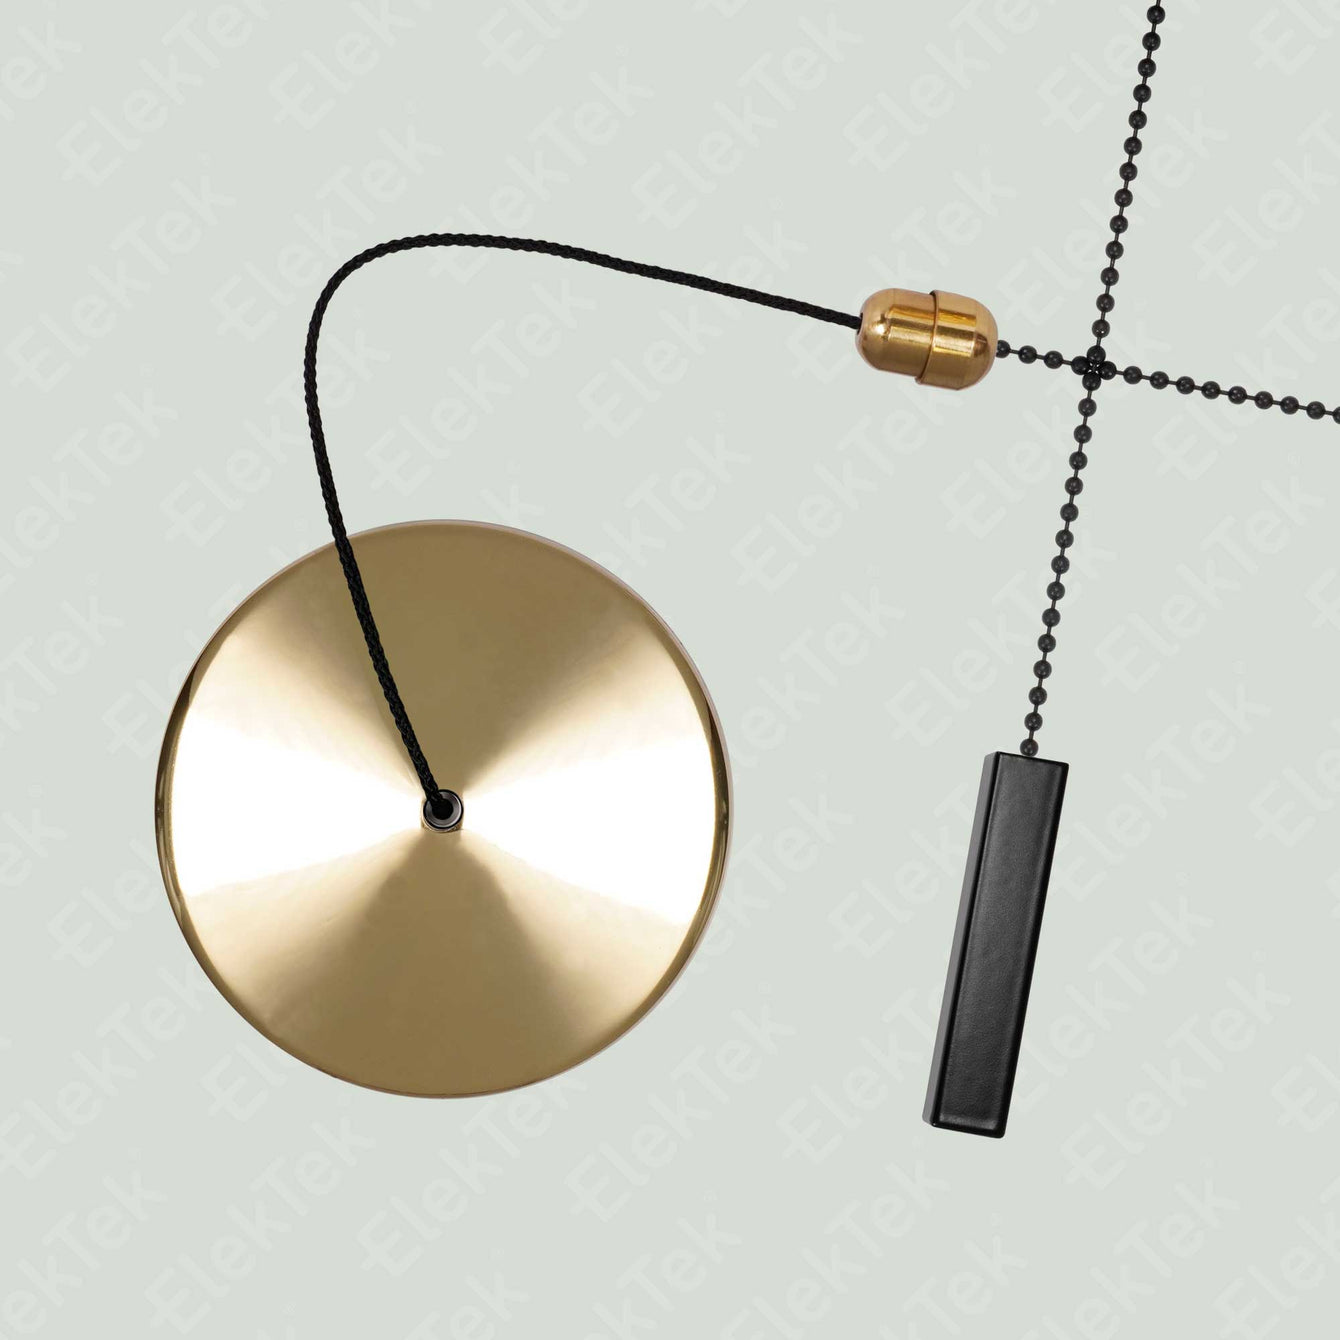 ElekTek Premium Brass Bathroom Light Pull Cord Switch Kit with Pull Chain Handle Black Cylinder / Black Cord